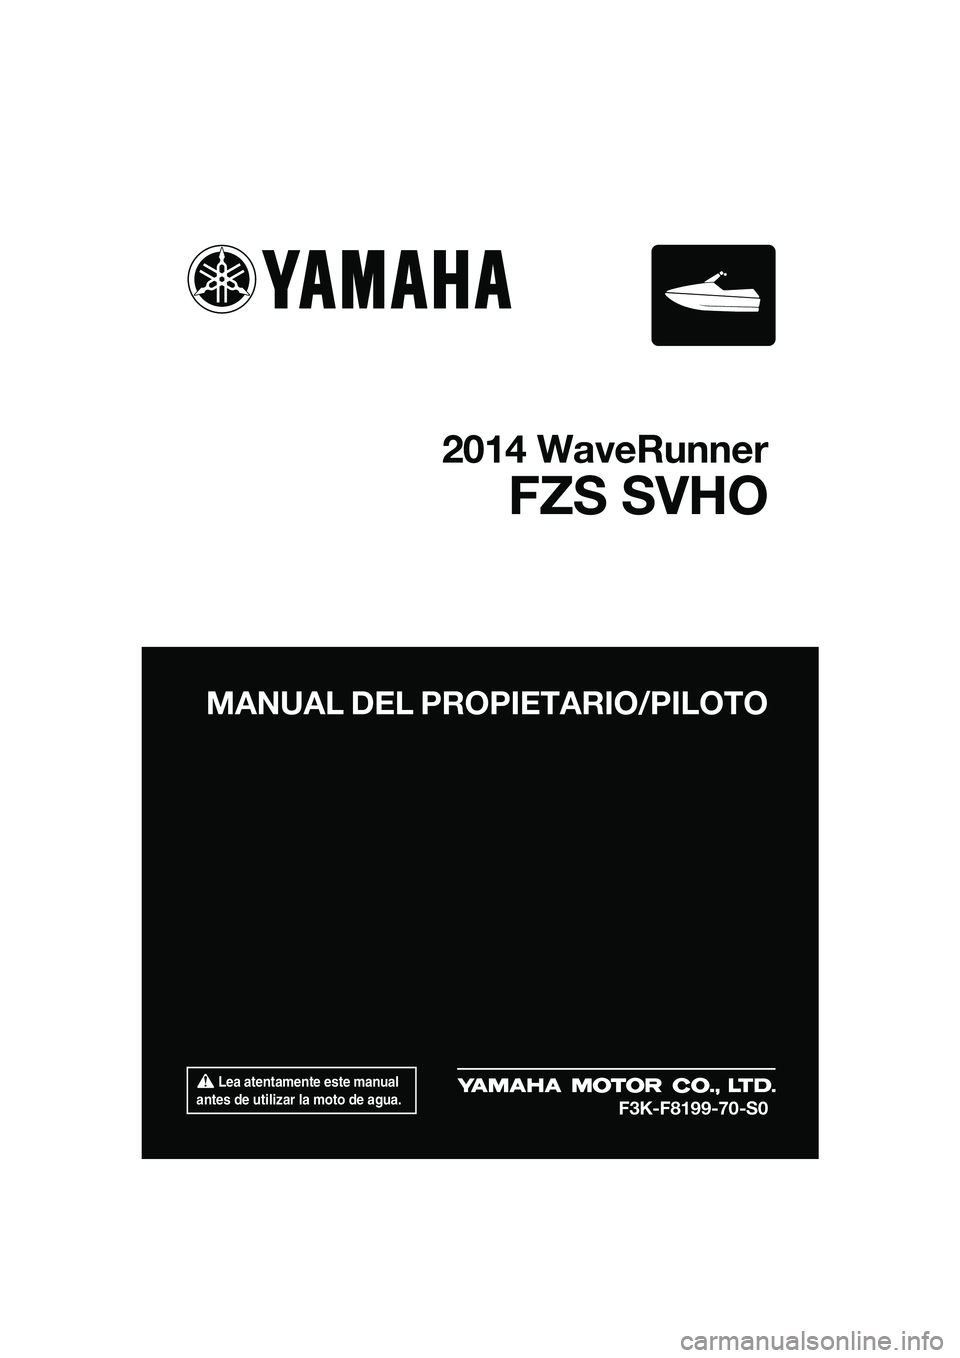 YAMAHA FZS SVHO 2014  Manuale de Empleo (in Spanish)  Lea atentamente este manual 
antes de utilizar la moto de agua.
MANUAL DEL PROPIETARIO/PILOTO
2014 WaveRunner
FZS SVHO
F3K-F8199-70-S0
UF3K70S0.book  Page 1  Tuesday, November 5, 2013  3:26 PM 